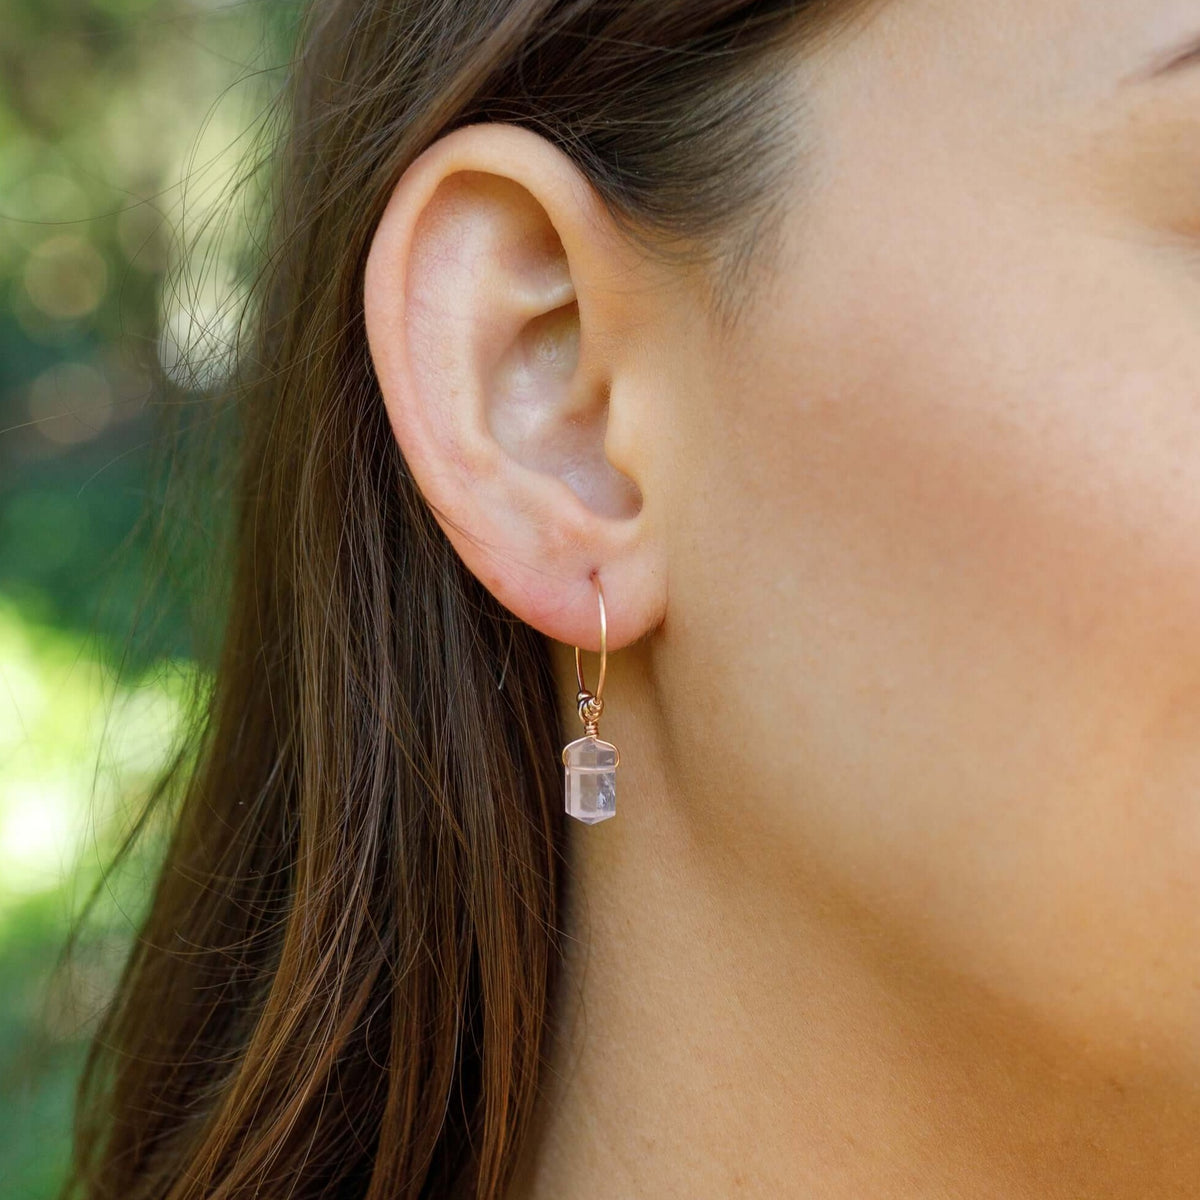 Tiny Double Terminated Crystal Hoop Dangle Earrings - Rose Quartz - 14K Rose Gold Fill - Luna Tide Handmade Jewellery